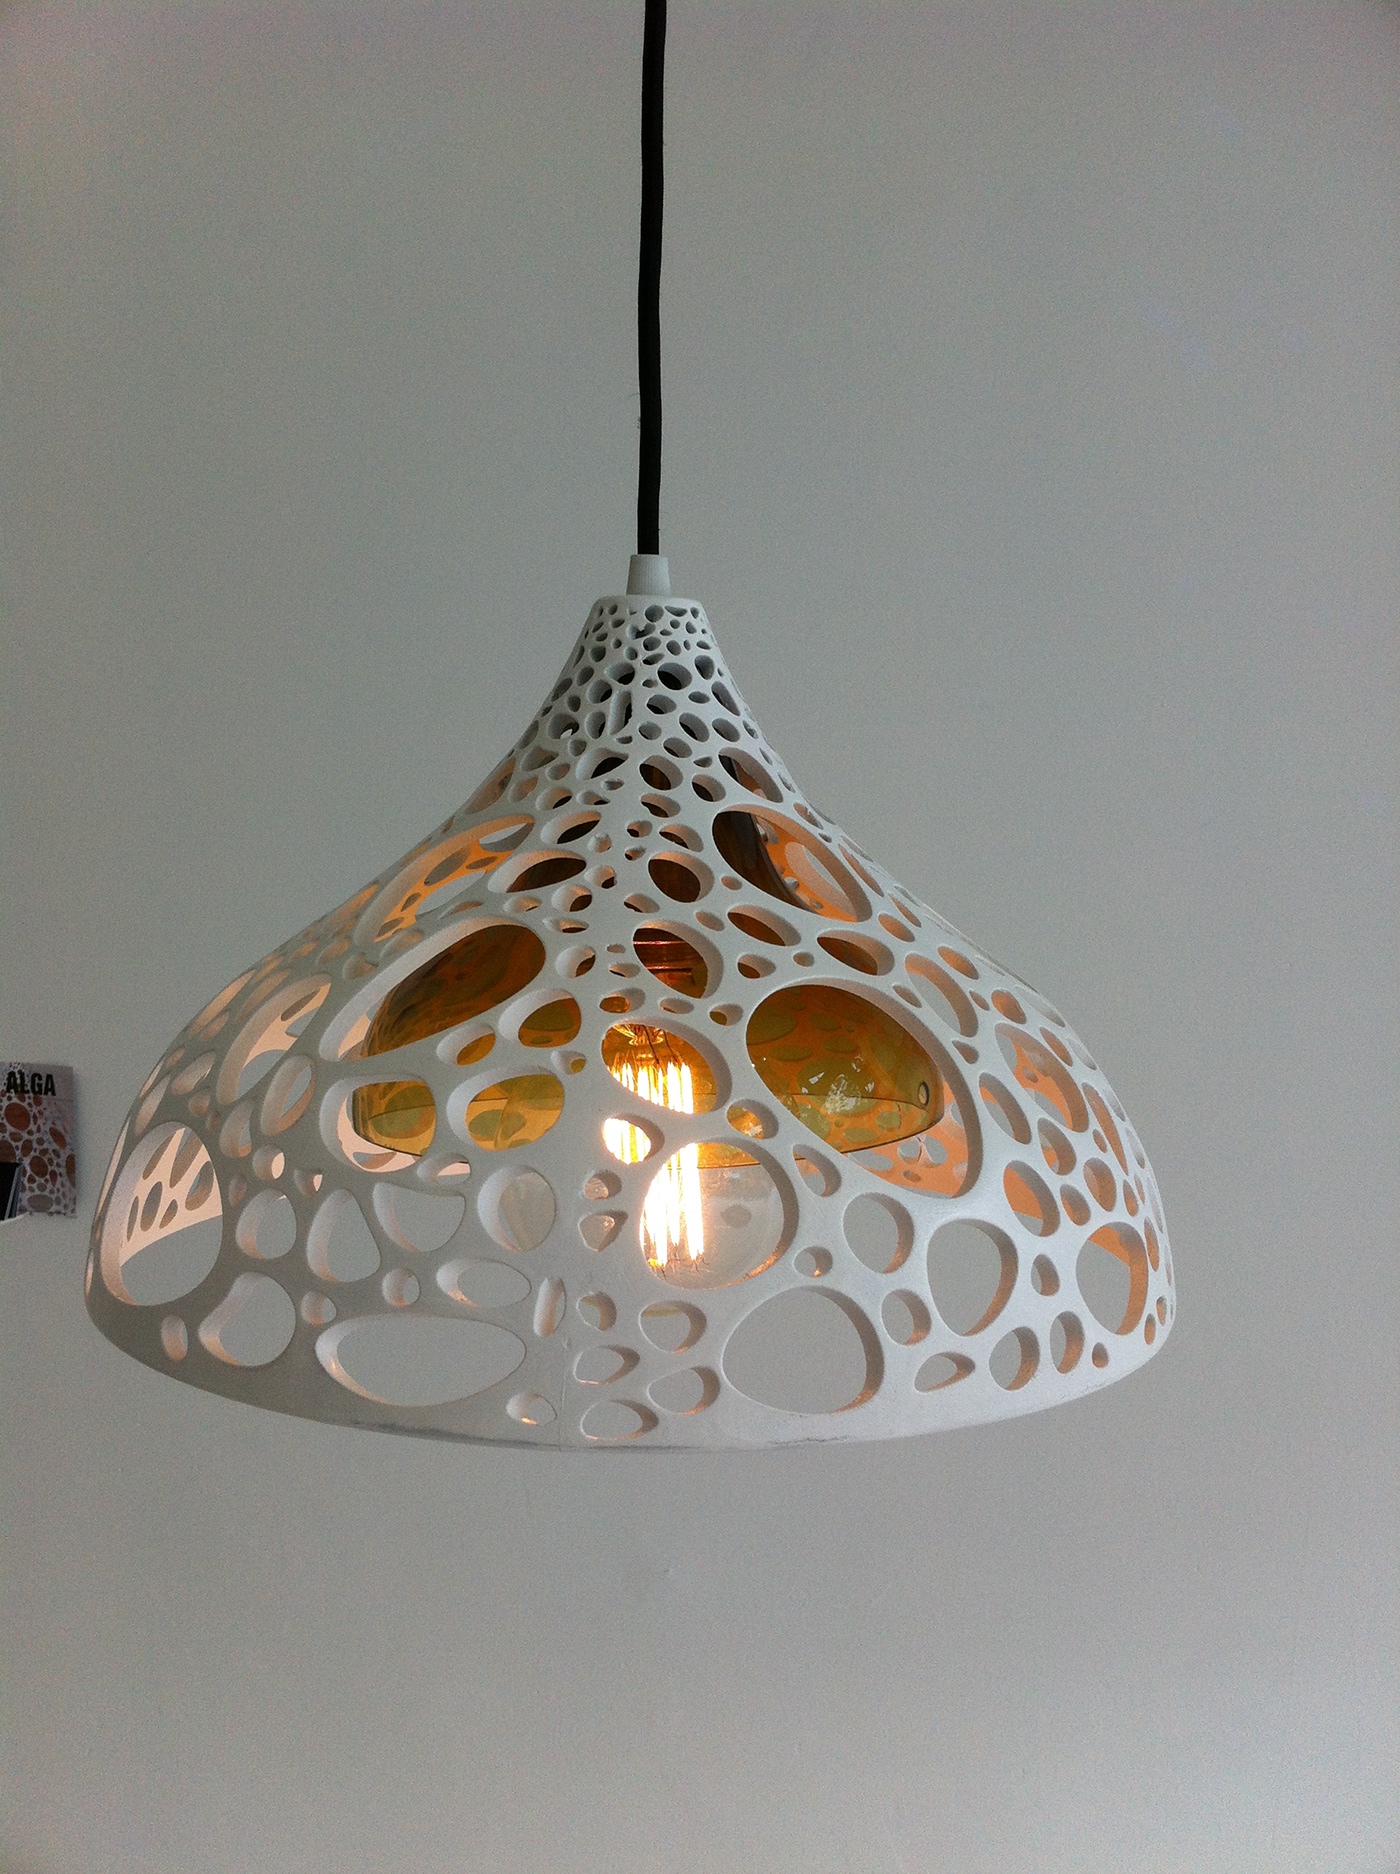 Alga algae design light pendant furniture lighting amazing award Interior for sale product organic light bulb creative